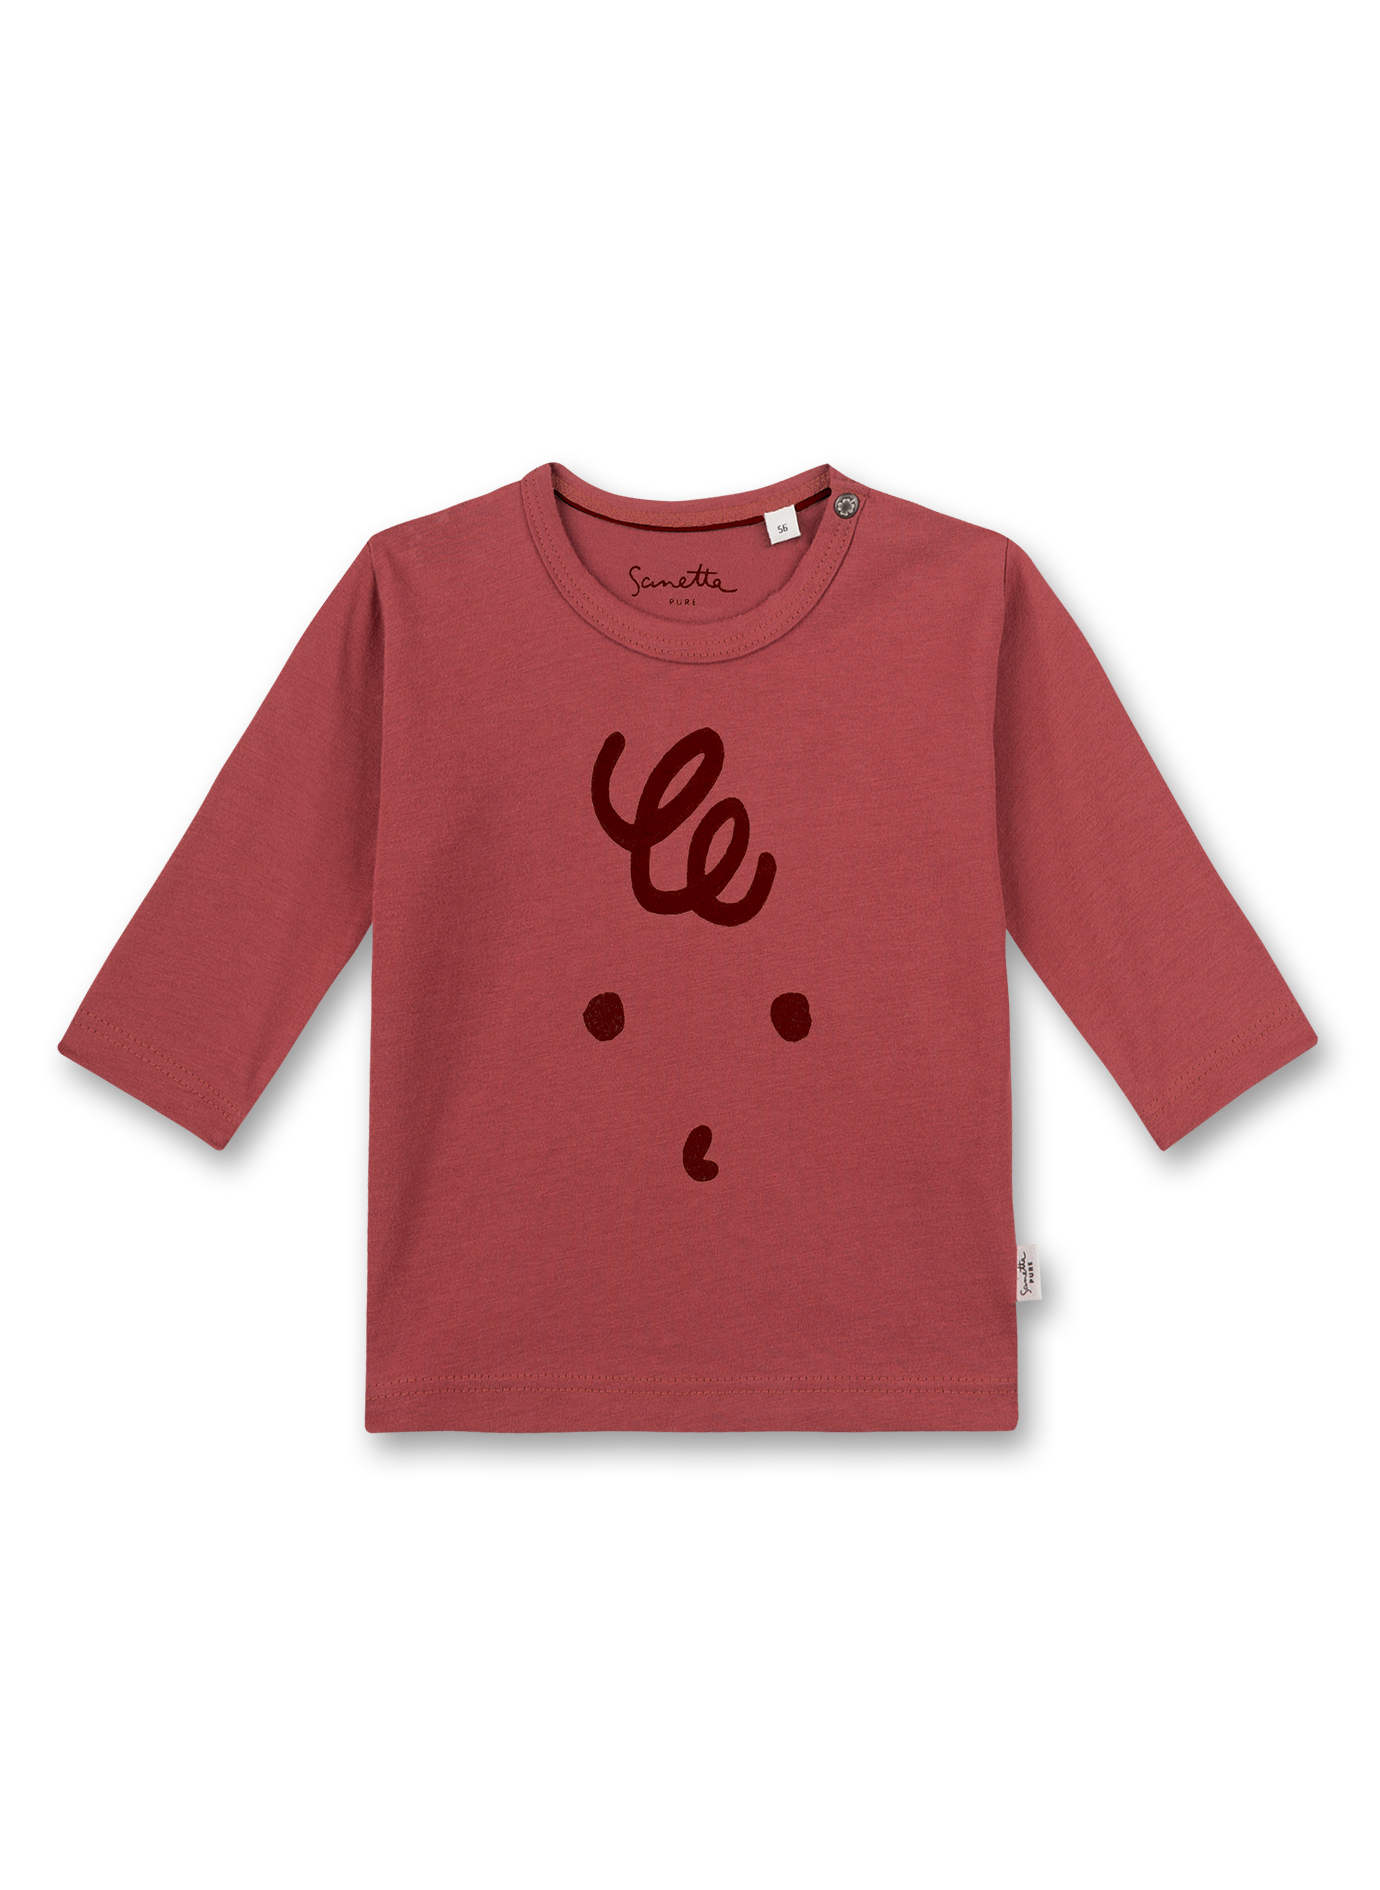 Mädchen-Shirt langarm Rot